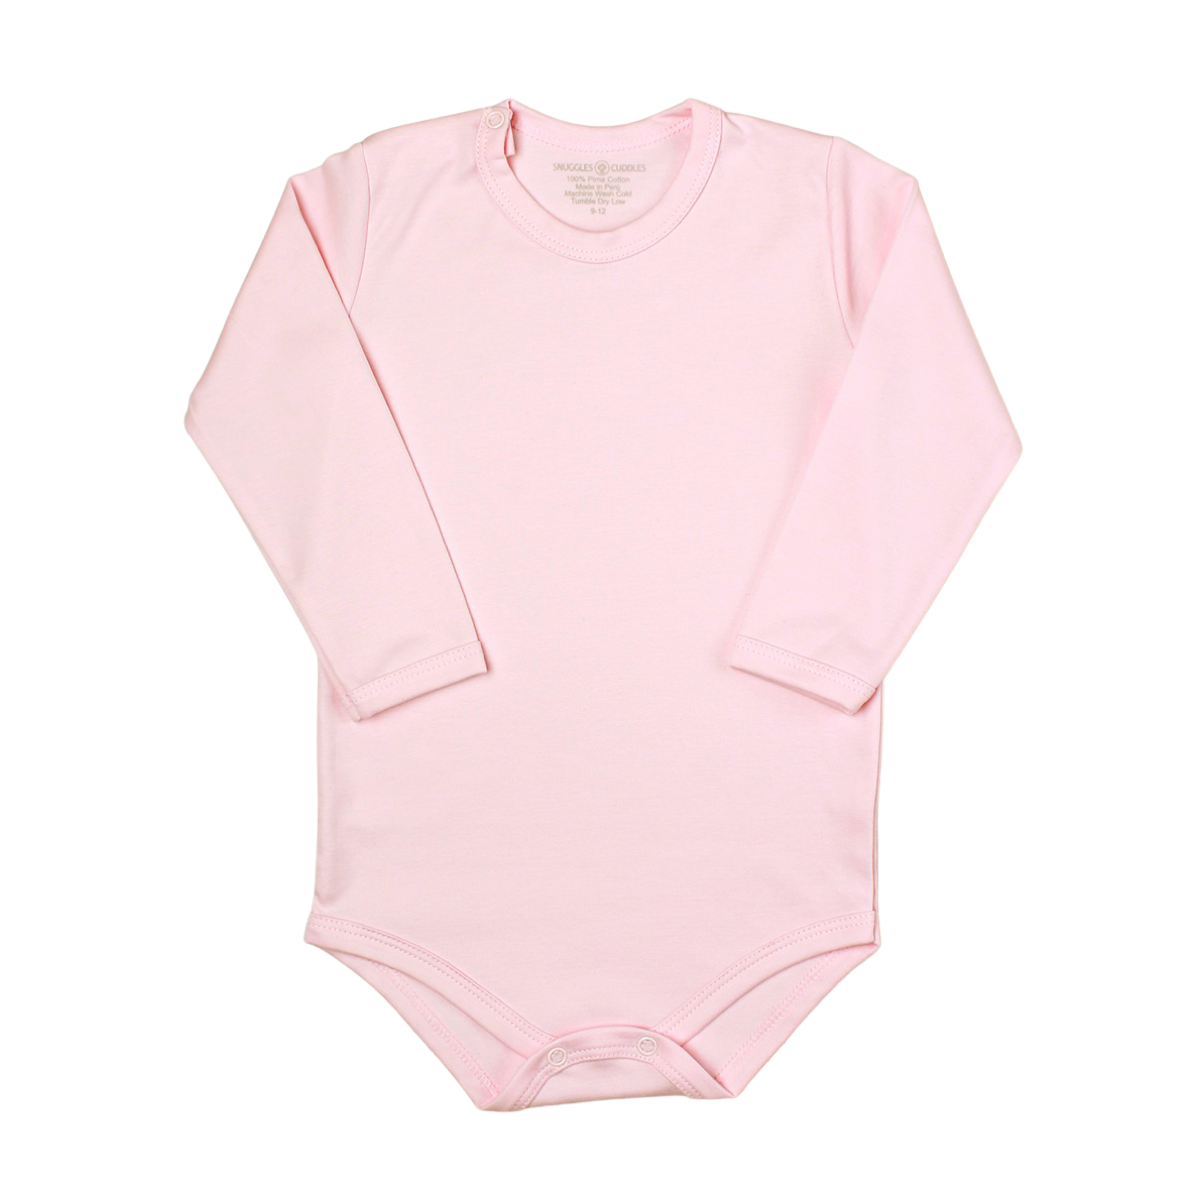 Pink - Long Sleeve Bodysuit 100% Pima Cotton